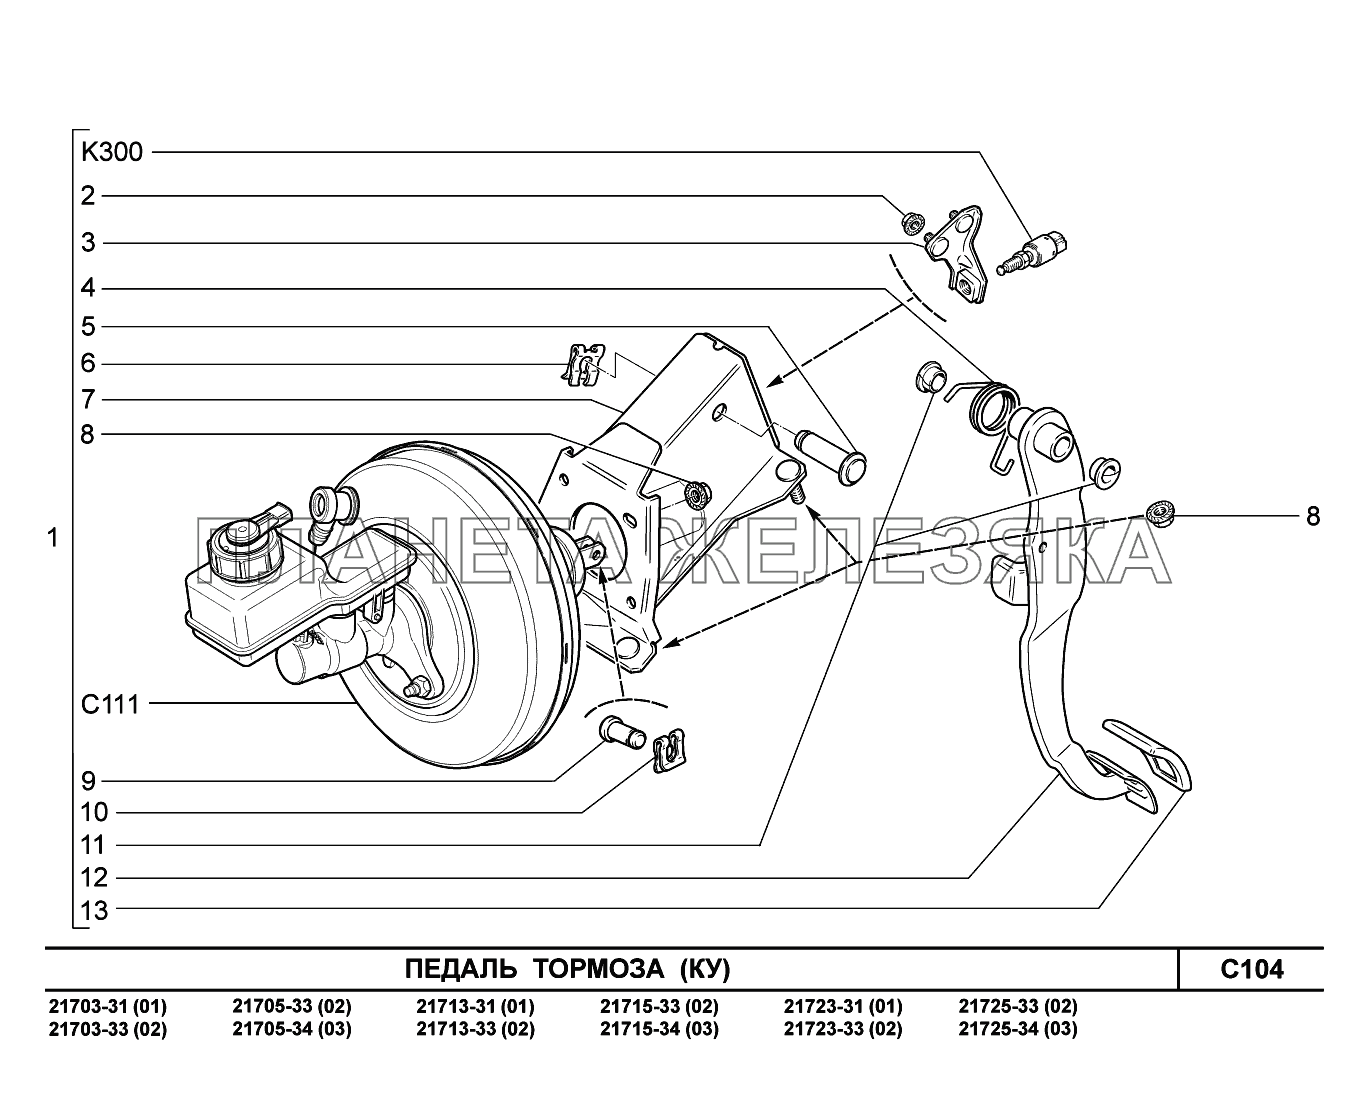 C104. Педаль тормоза ВАЗ-2170 